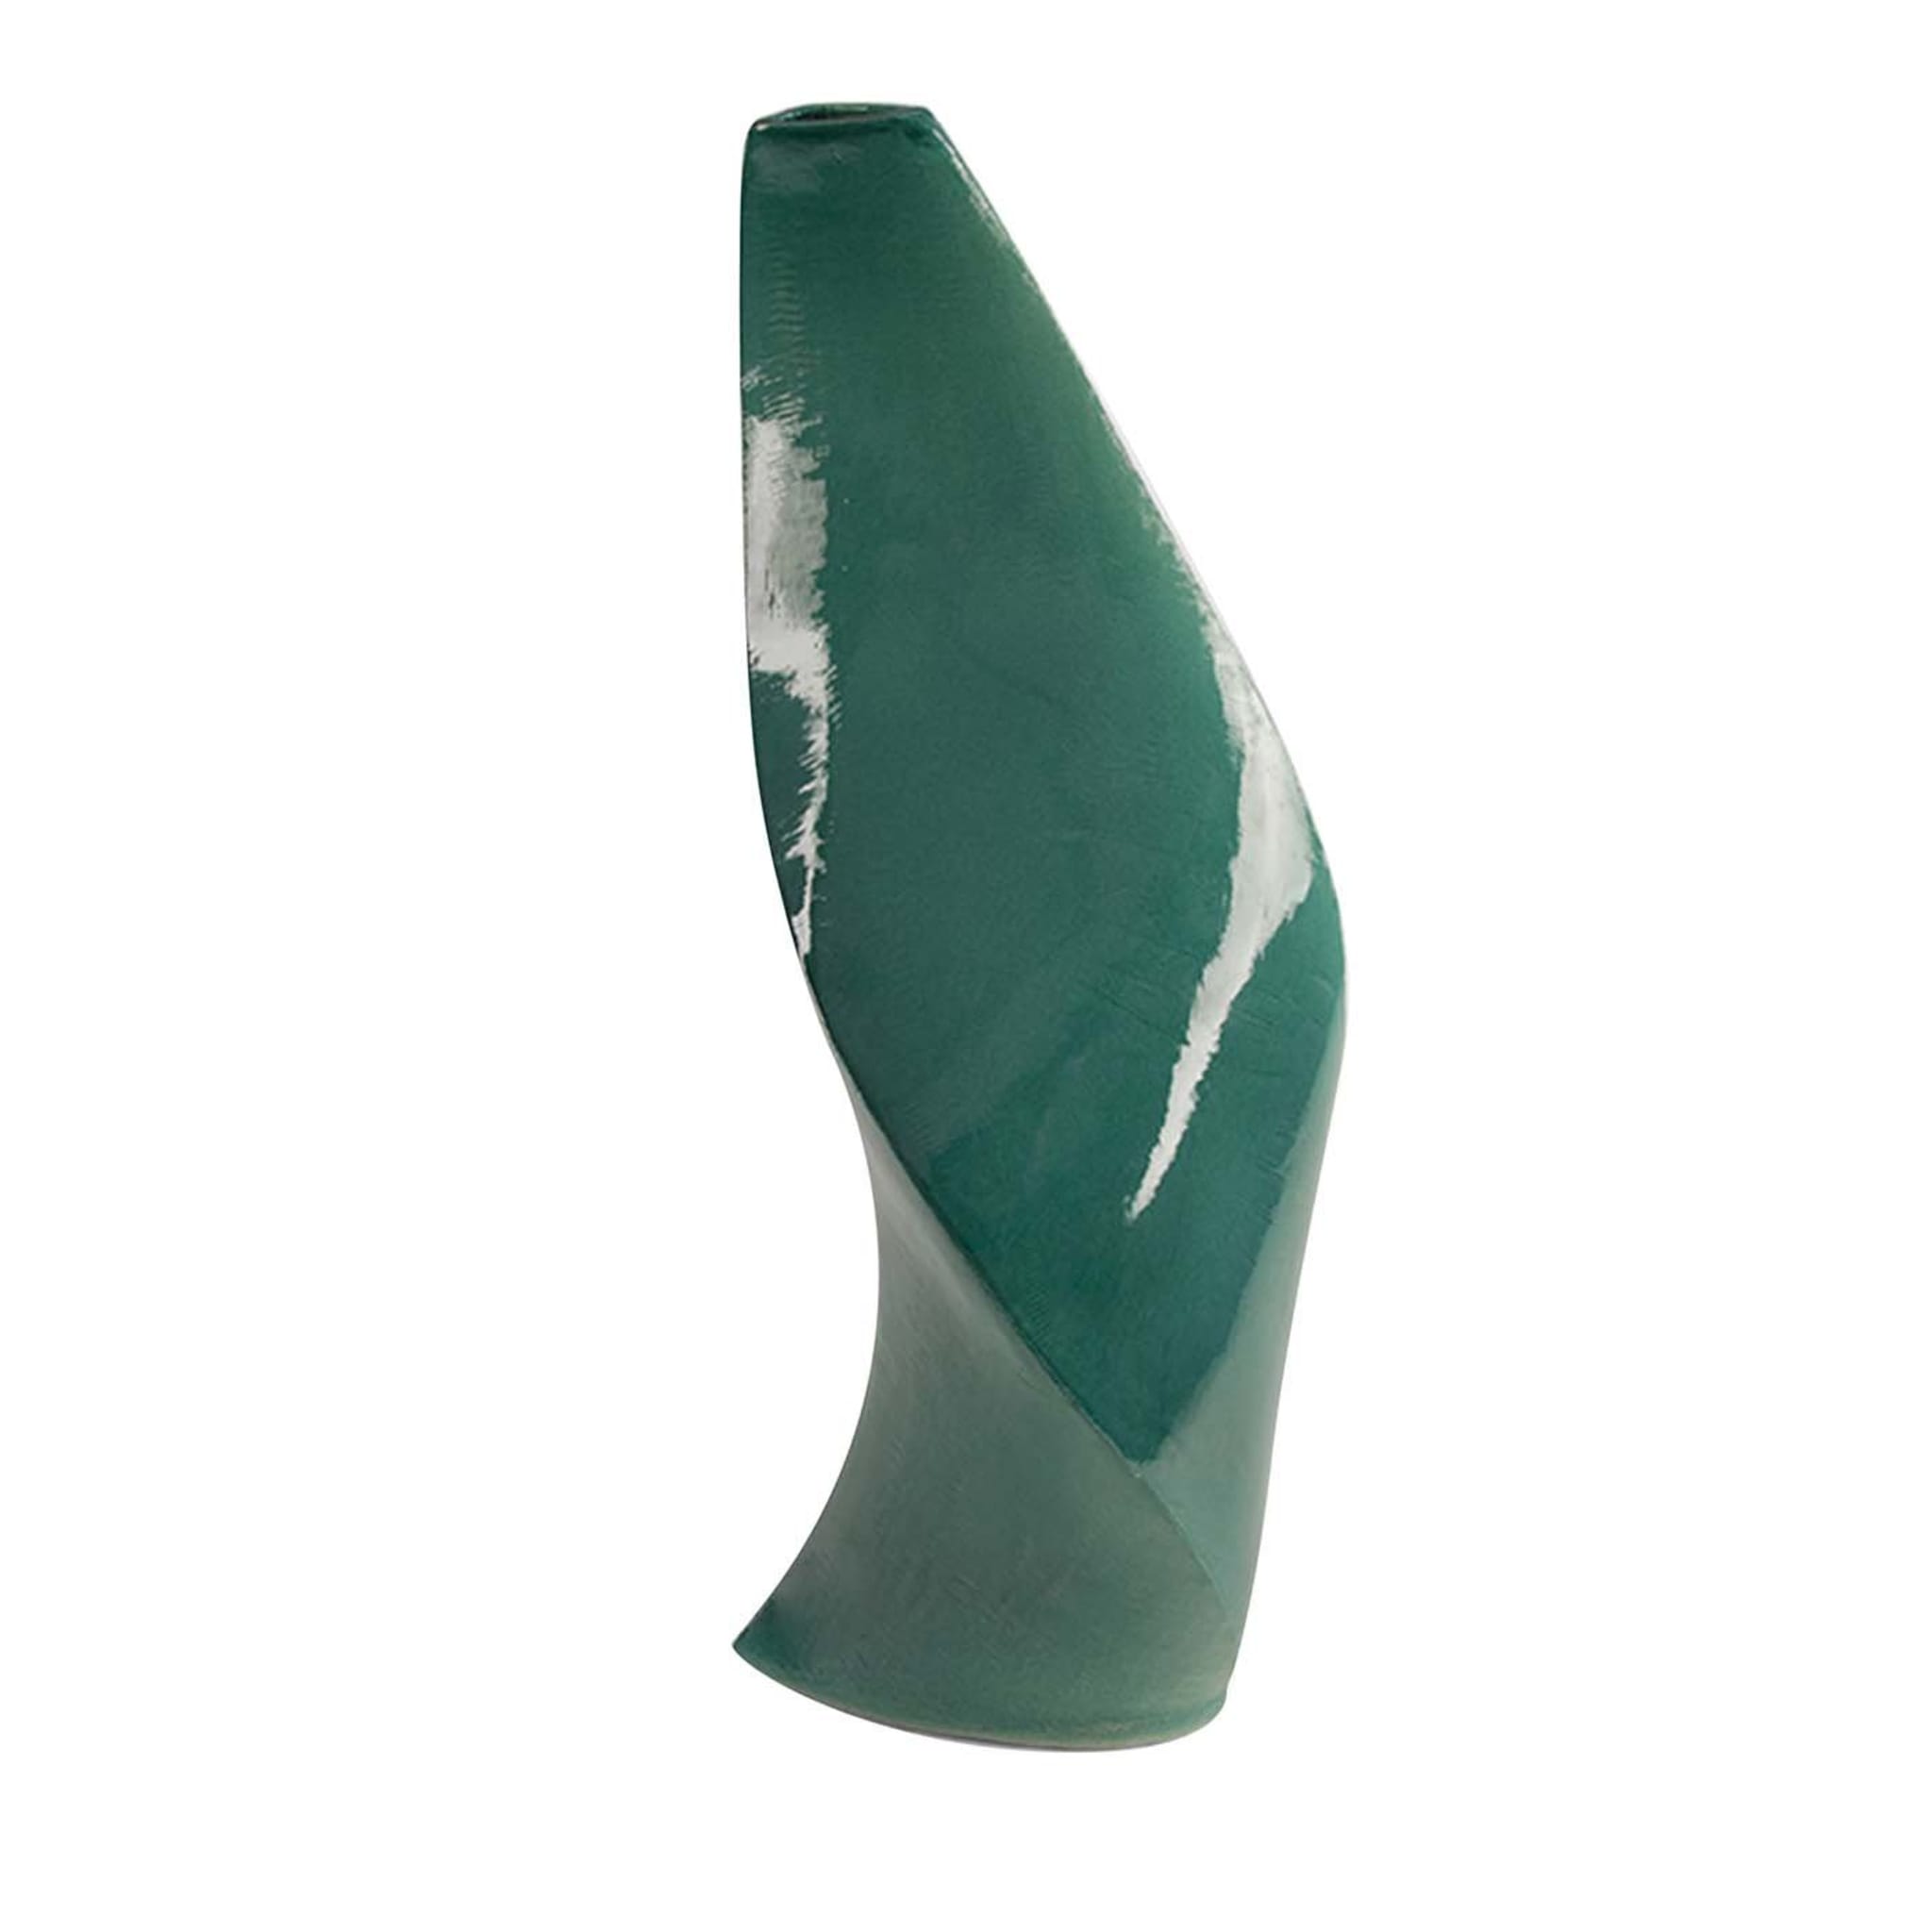 Vase sculptural vert Demeter #1 - Vue principale